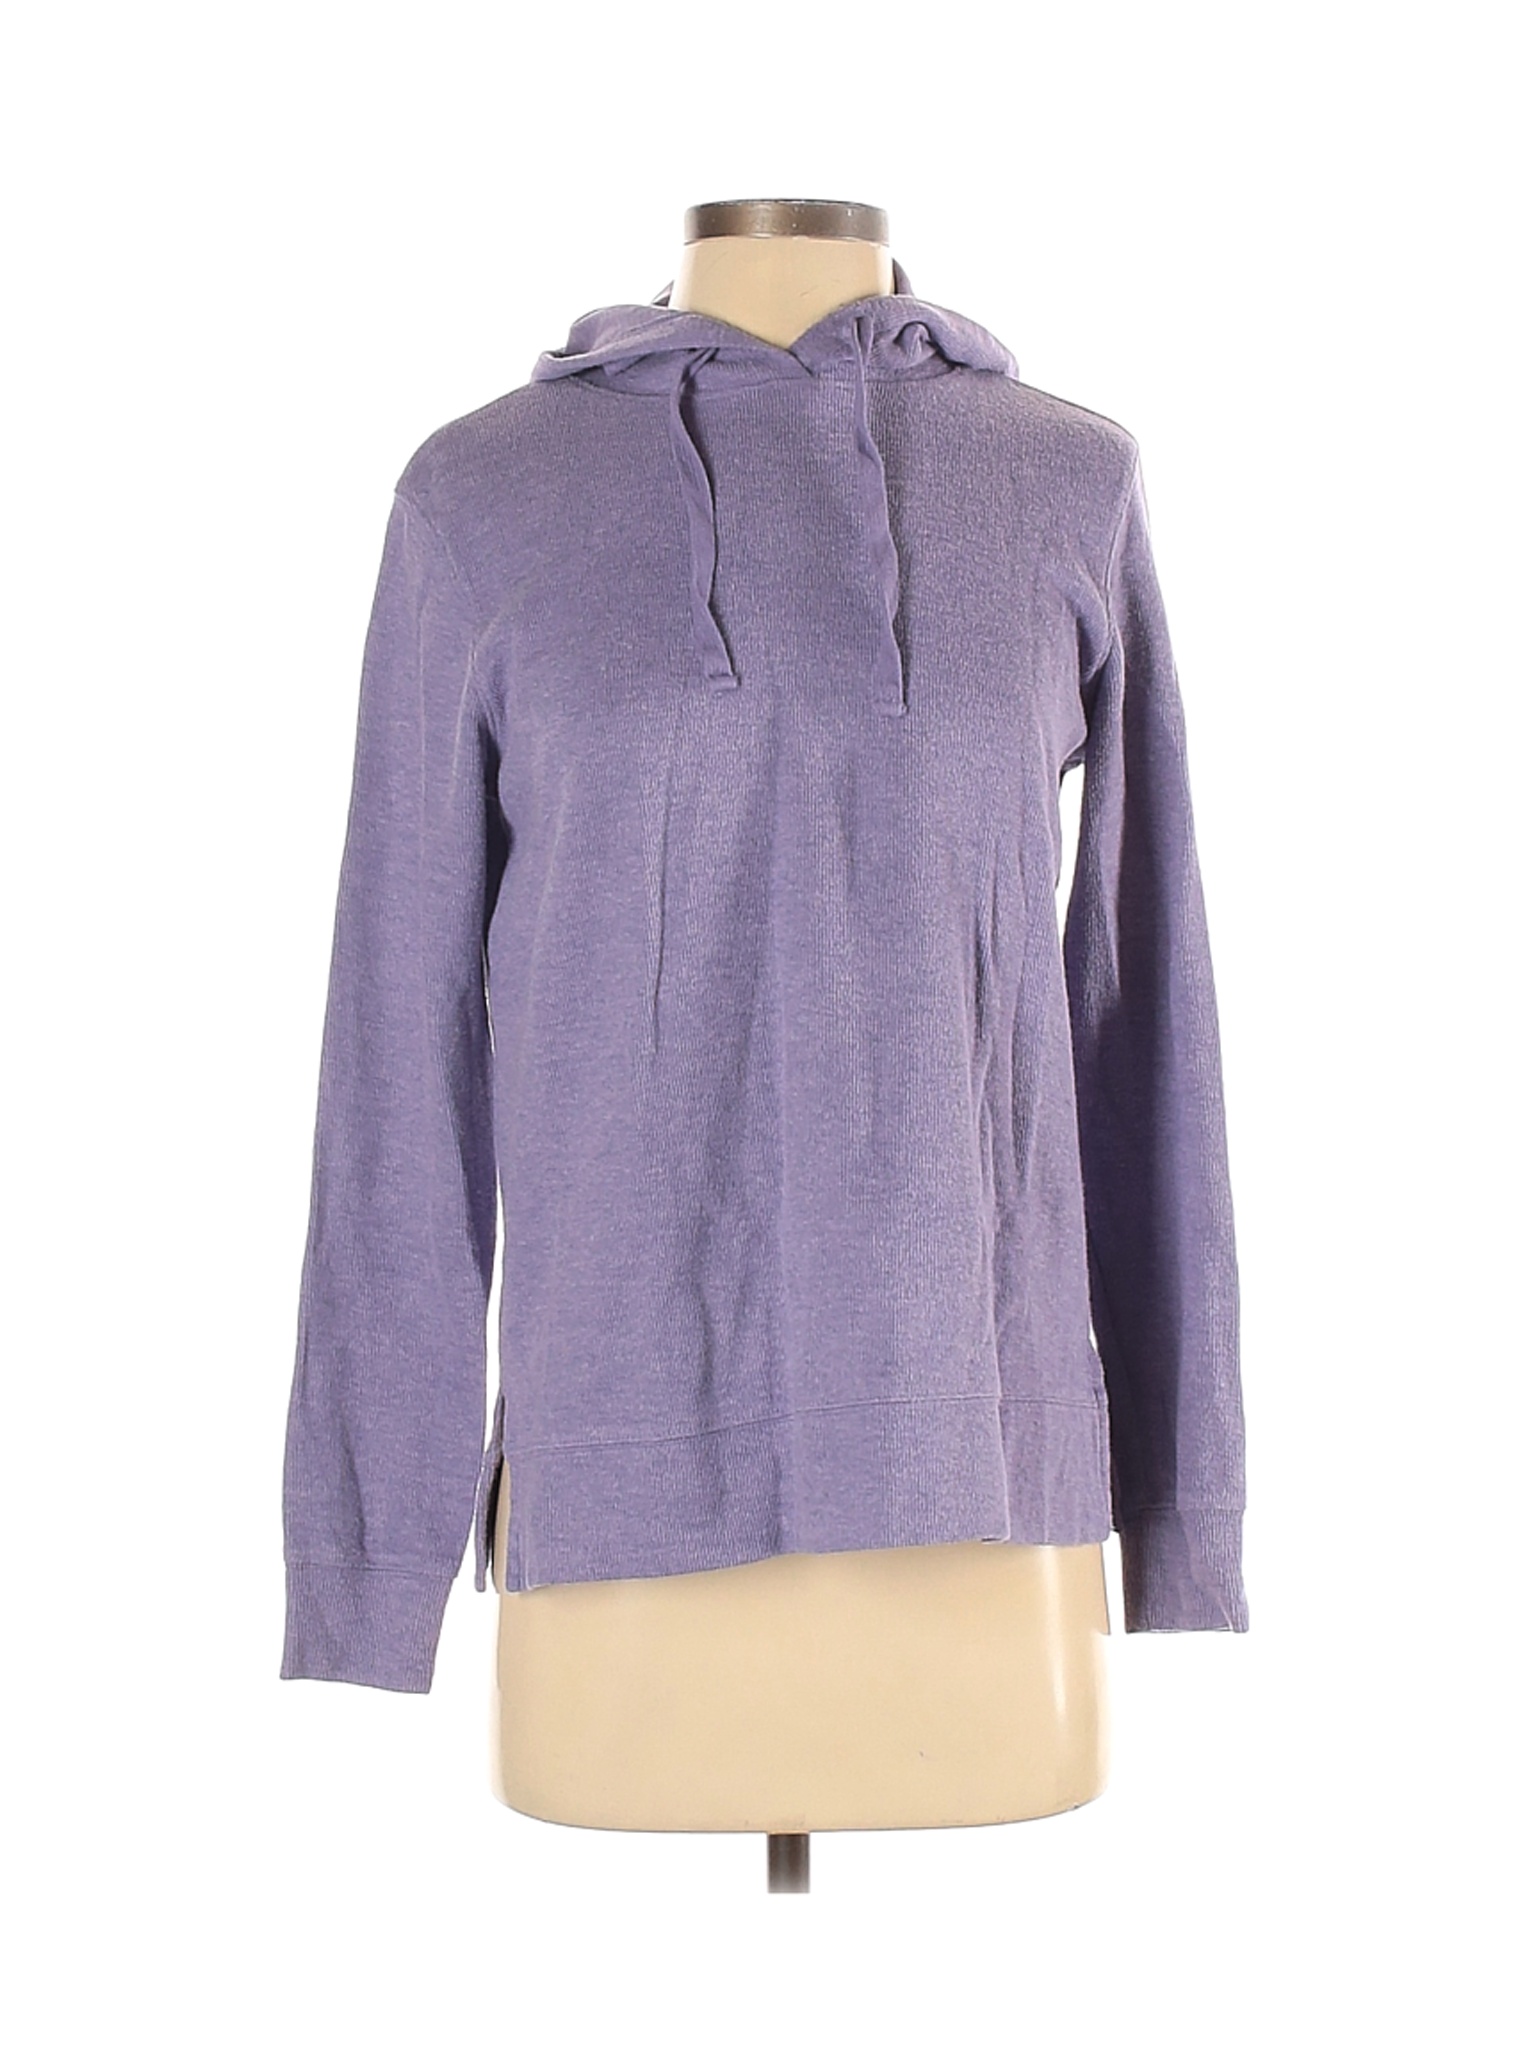 Old Navy Women Purple Pullover Hoodie XS | eBay